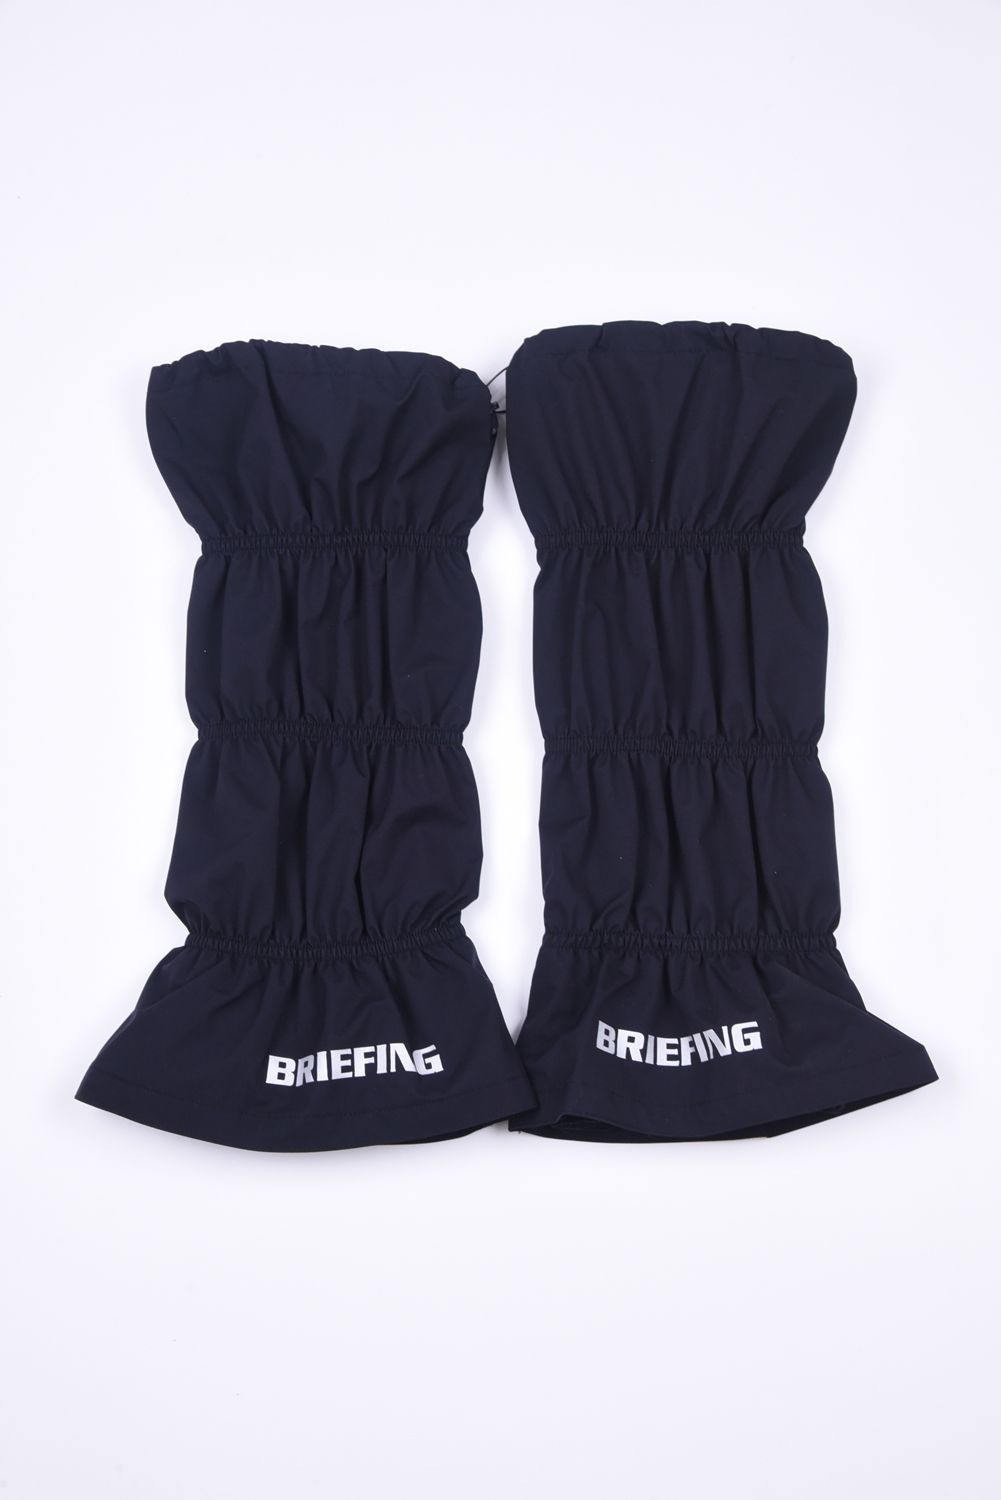 BRIEFING - 【レディース】 WOMENS WATER PROOF LEG COVER / ブランド ...